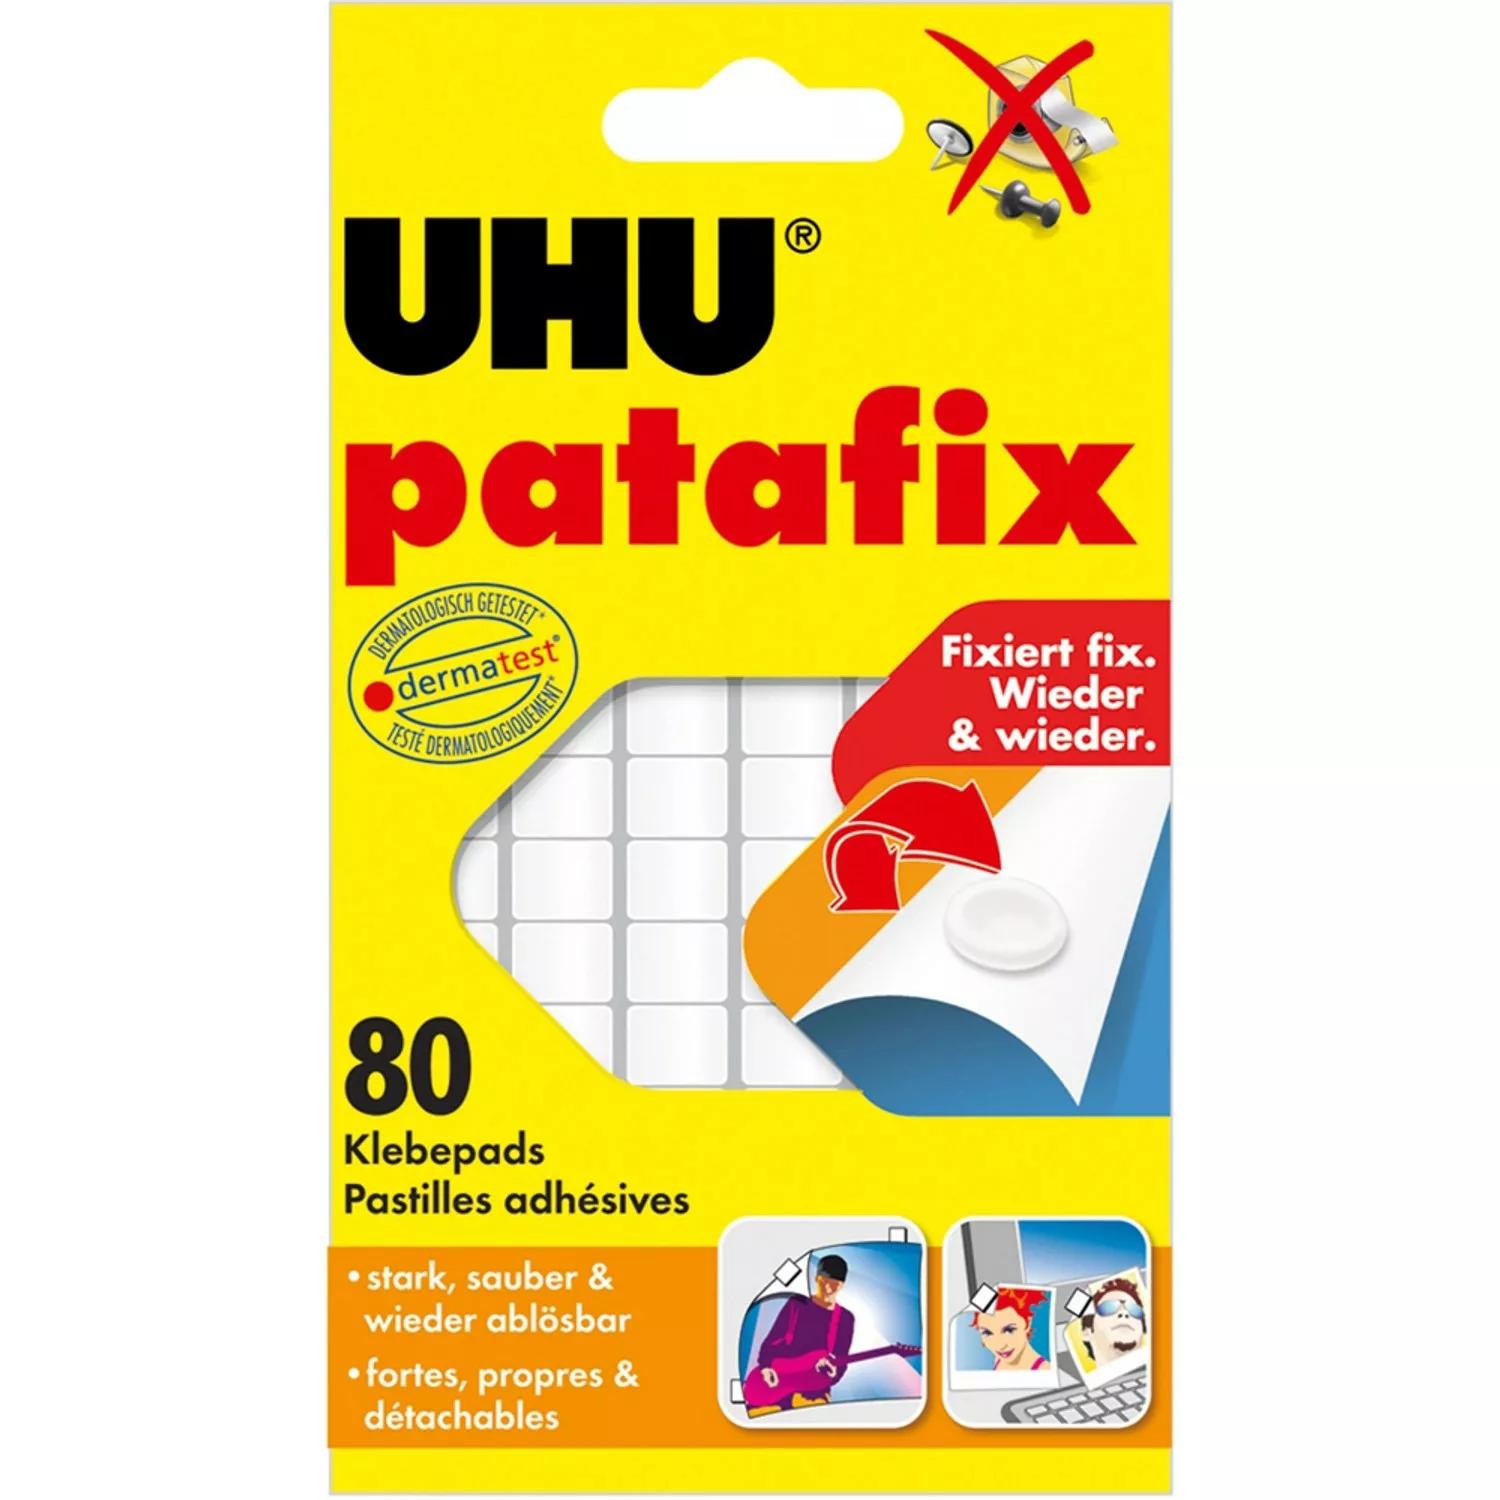 Uhu Patafix Original Weiß 80 Pads günstig online kaufen